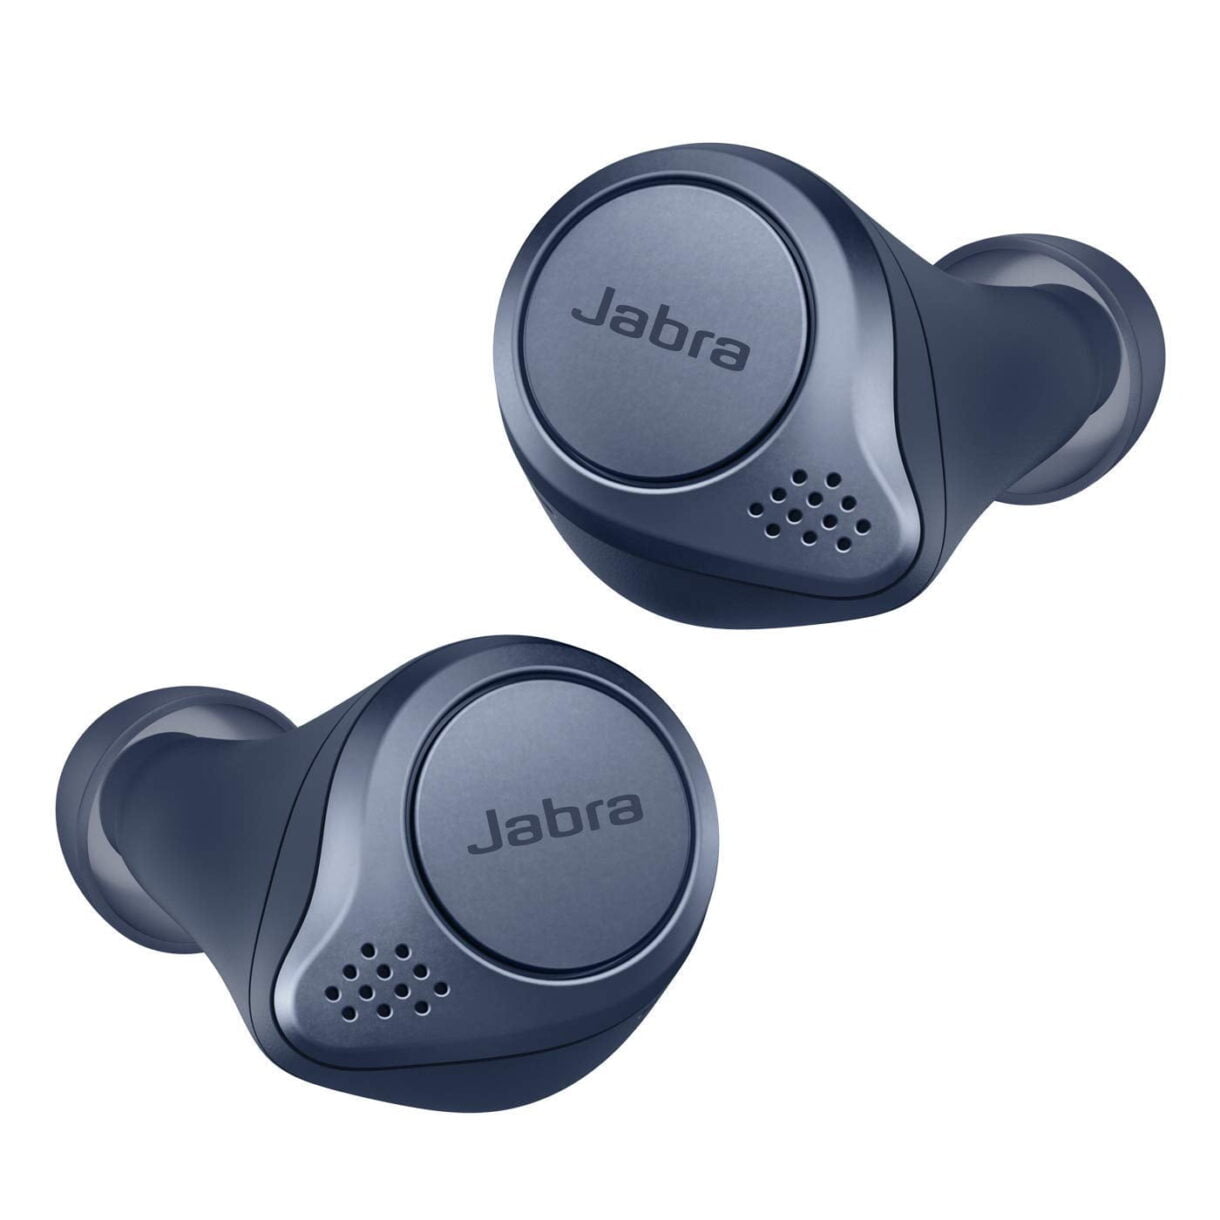 Jabra Elite Active 75t True Wireless Active Noise Cancelling (ANC)